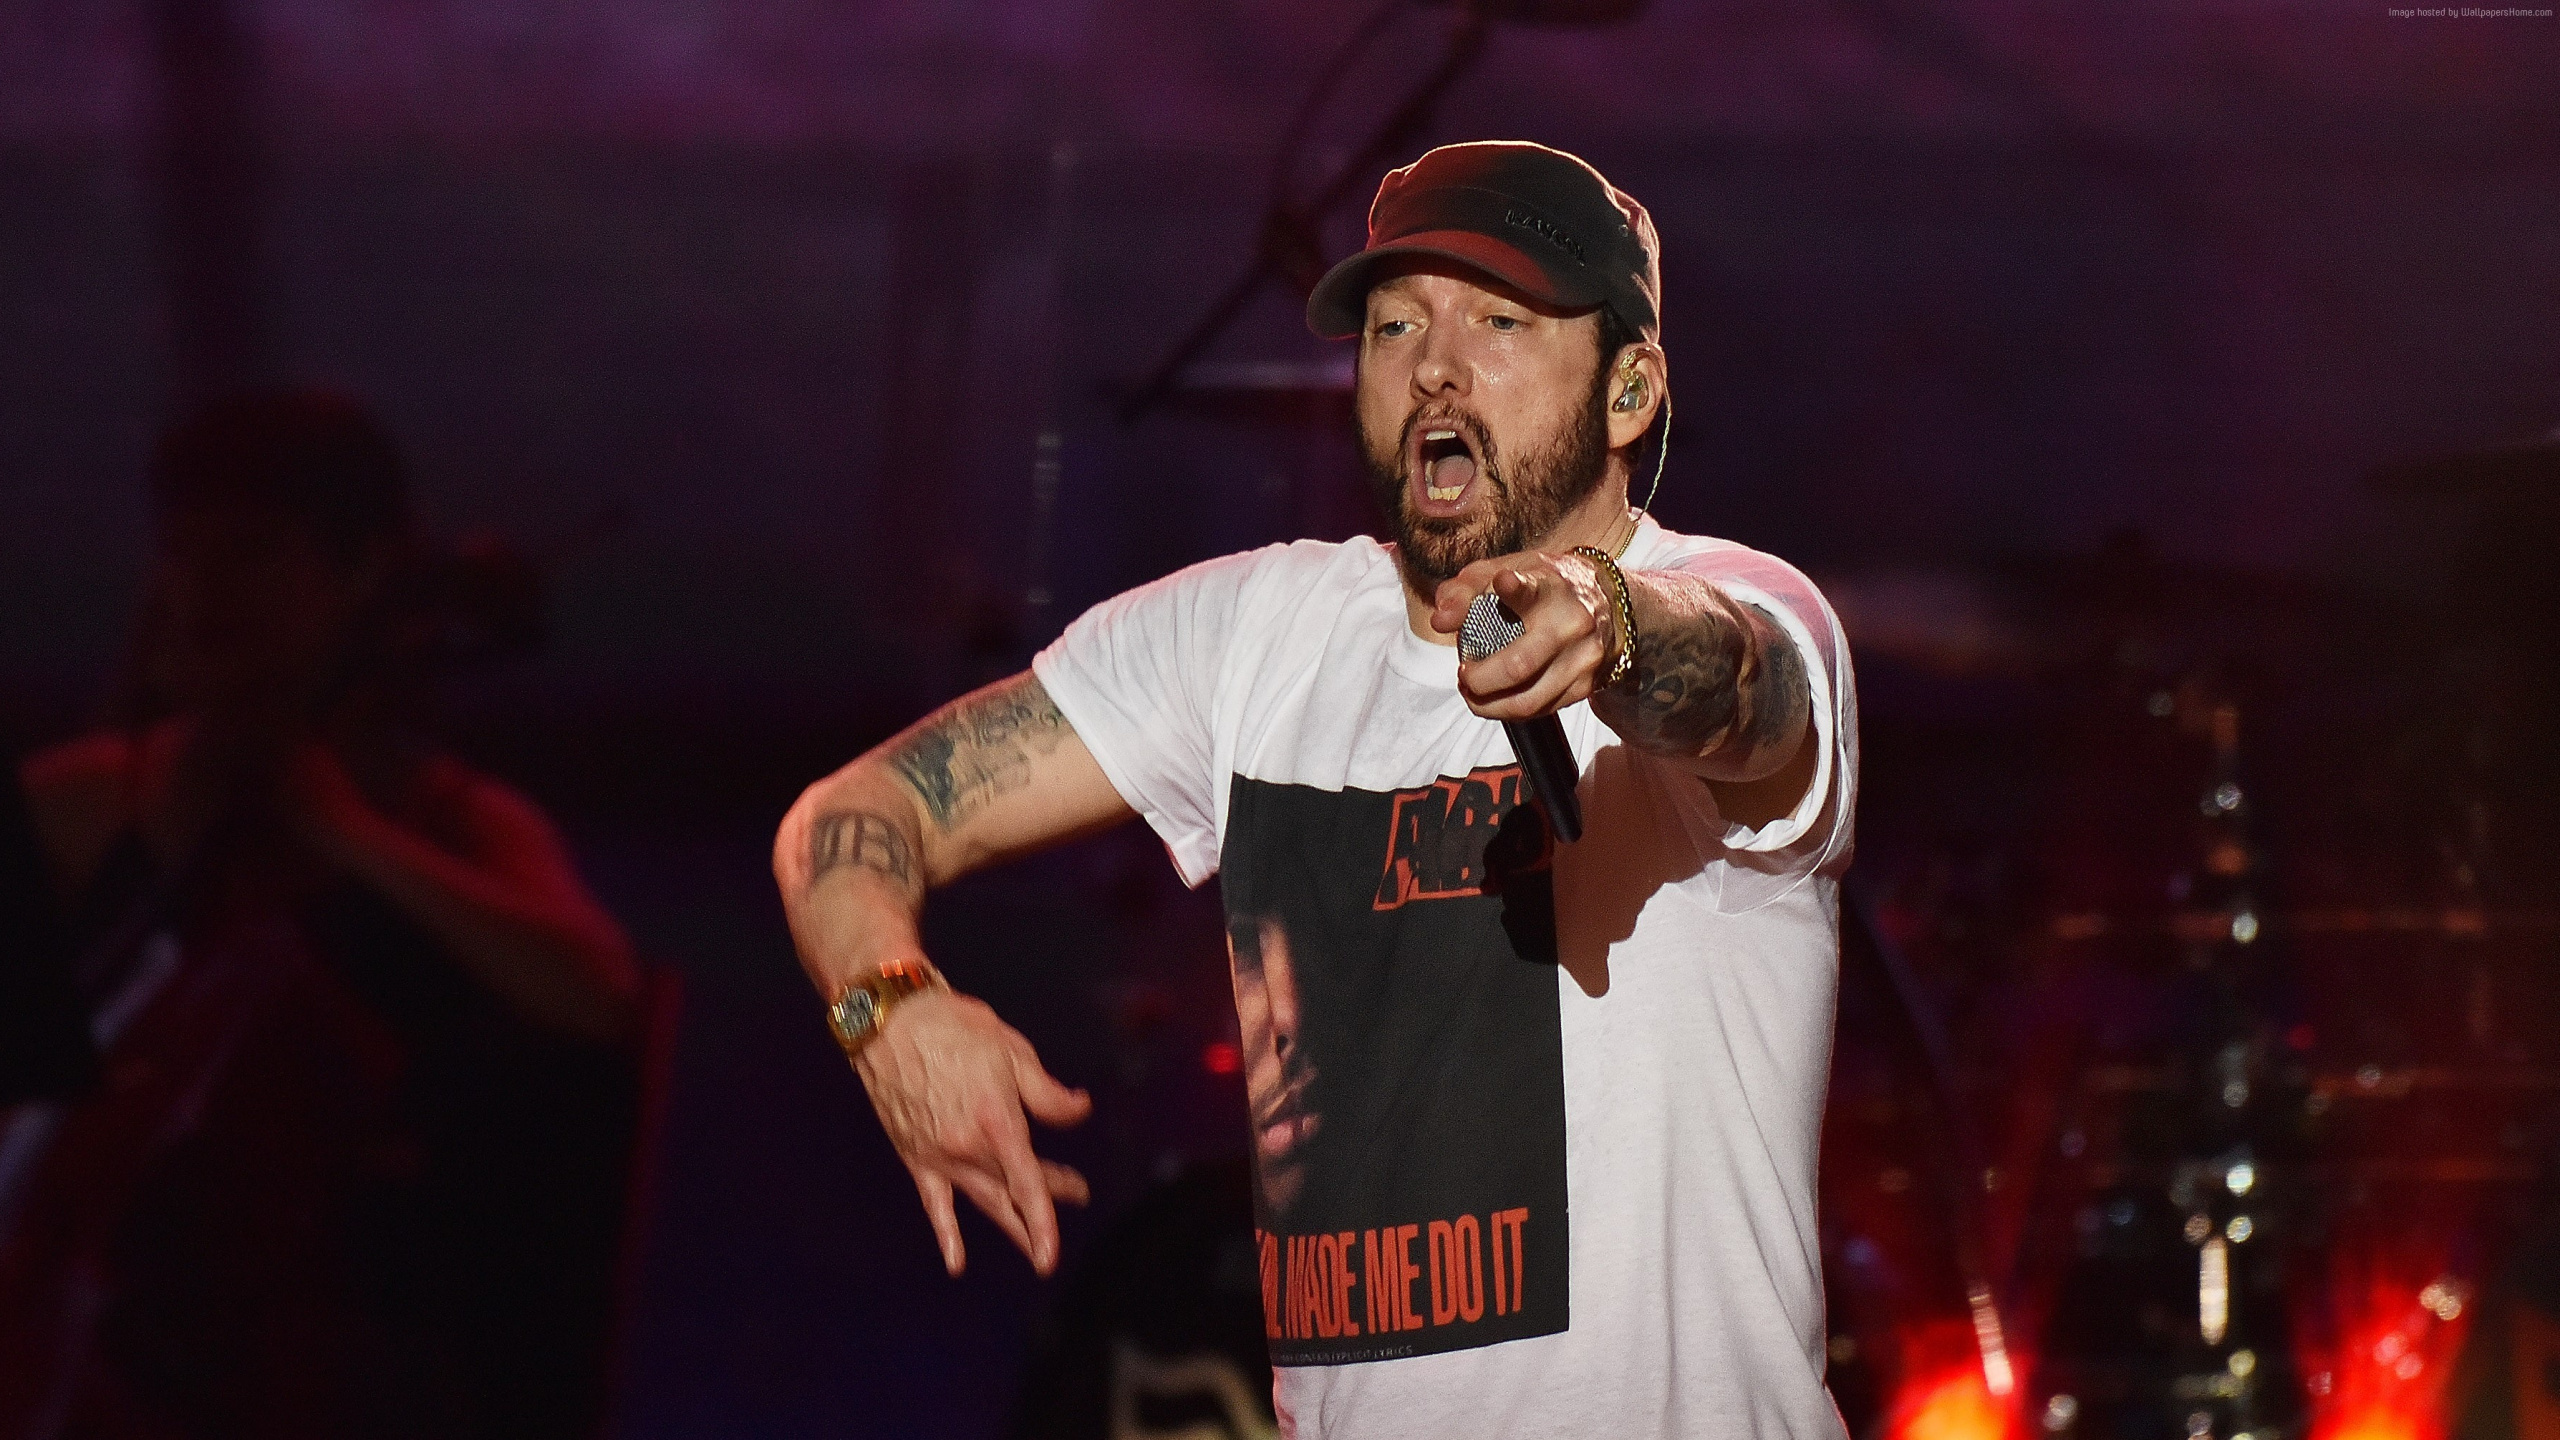 Eminem, Rapper, Entertainment, Performance, Music. Wallpaper in 2560x1440 Resolution